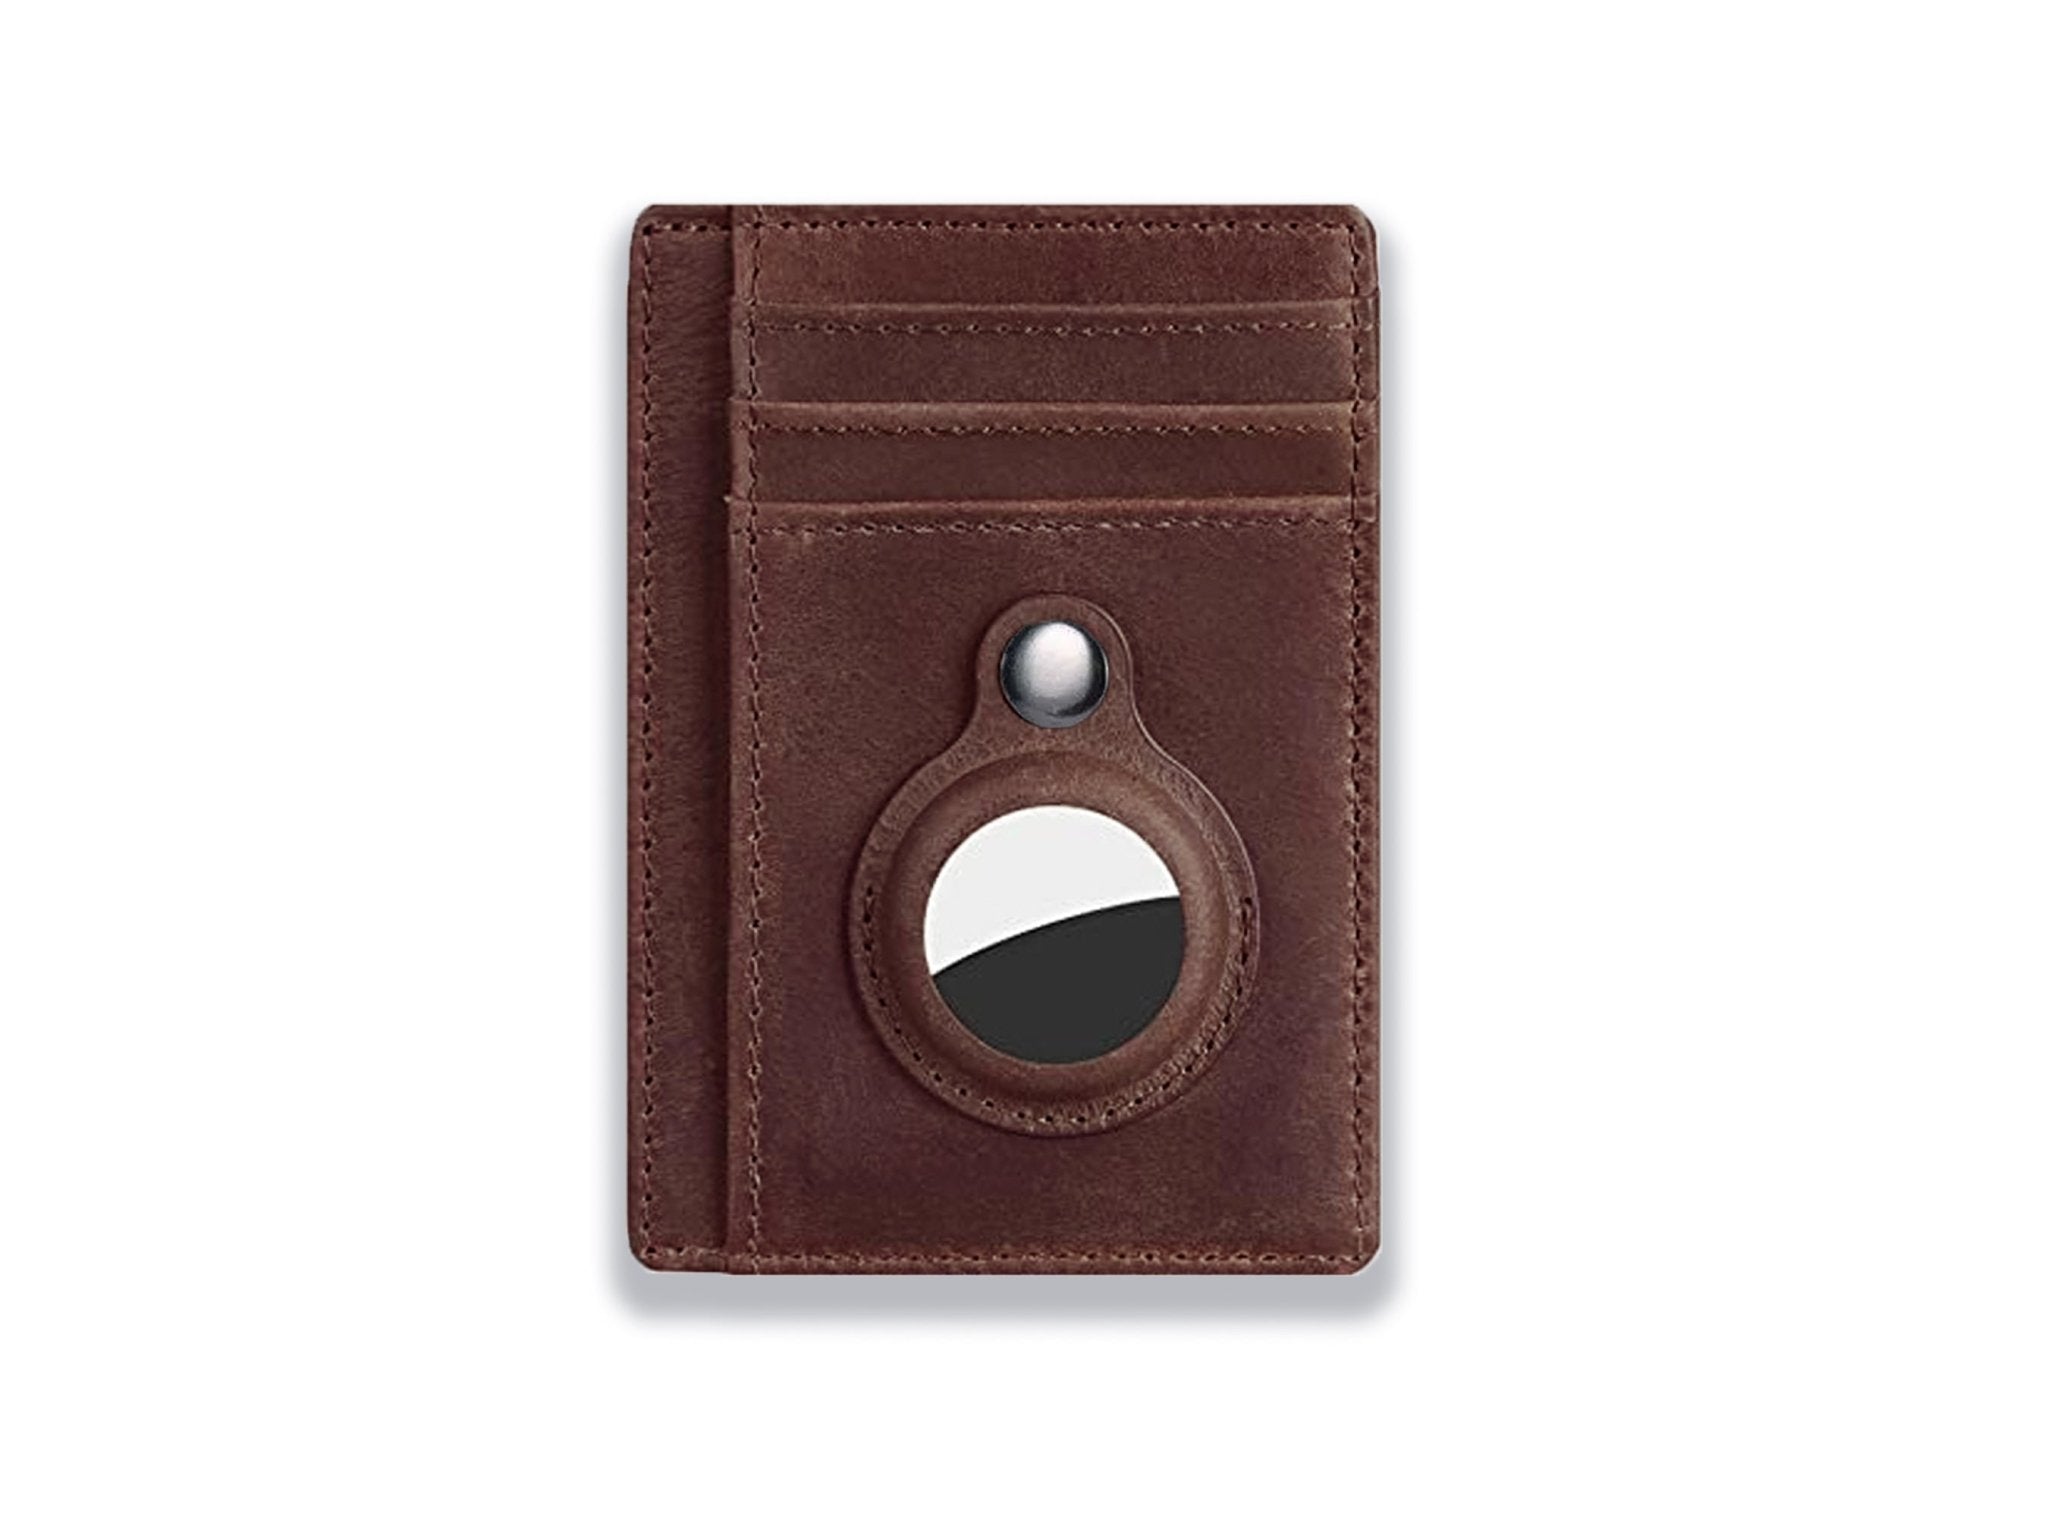 AirTag Minimalist Slim Wallet | Genuine Leather Wallet | RFID Wallet | Leather Card Holder Wallets Dark Brown  Accessories Gifts UK